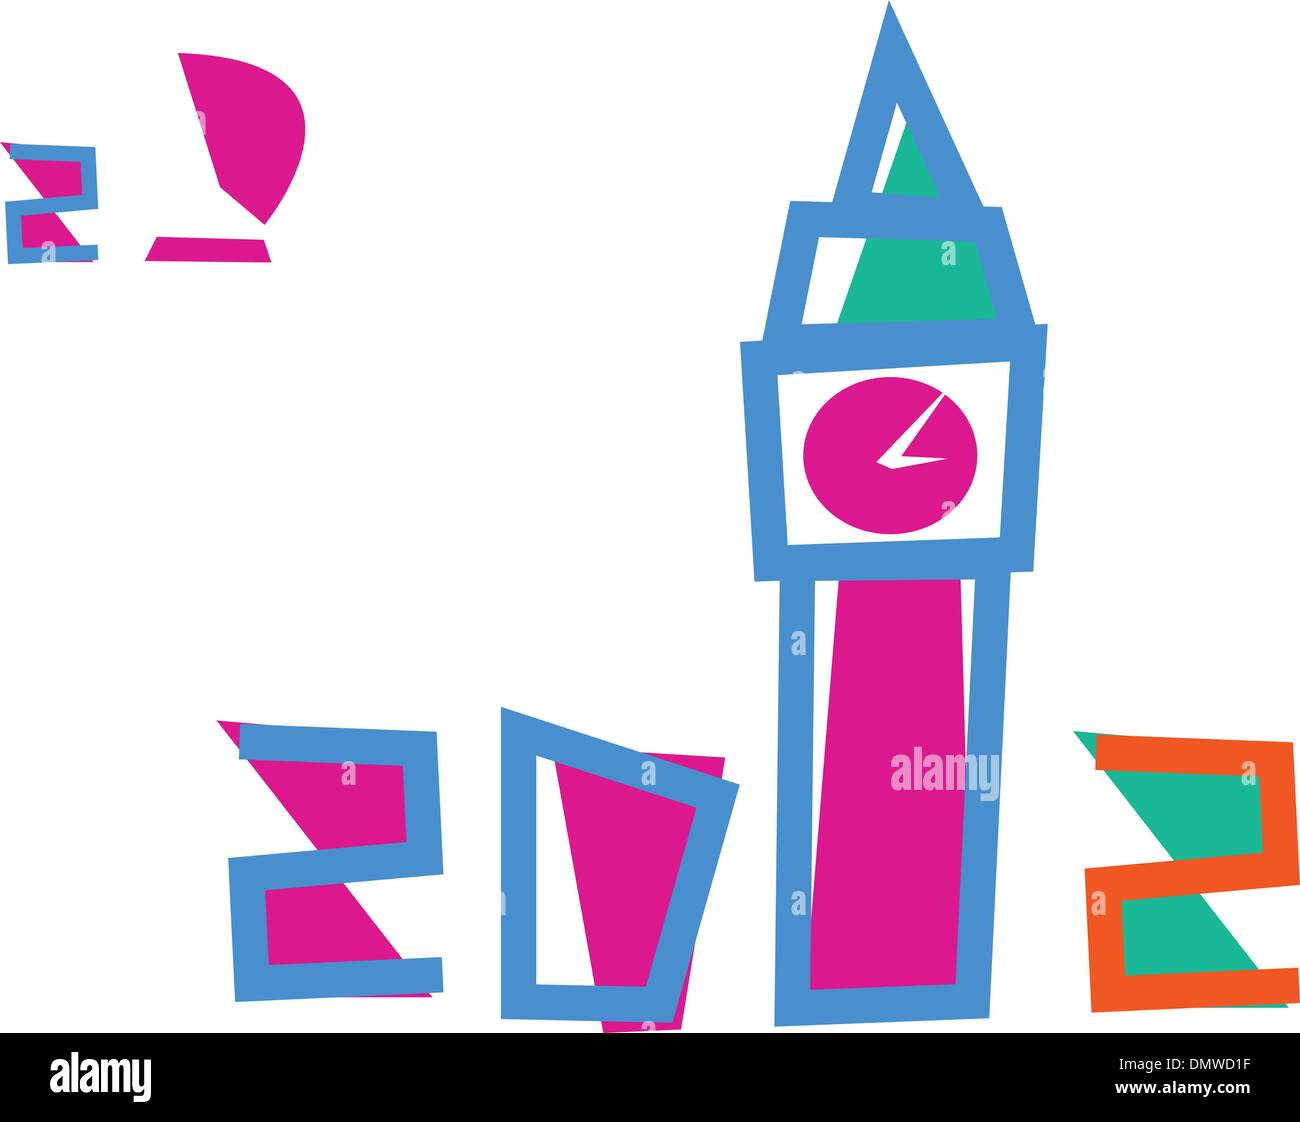 London 2012 Games. Set of 3 Illustrations Stock Vector